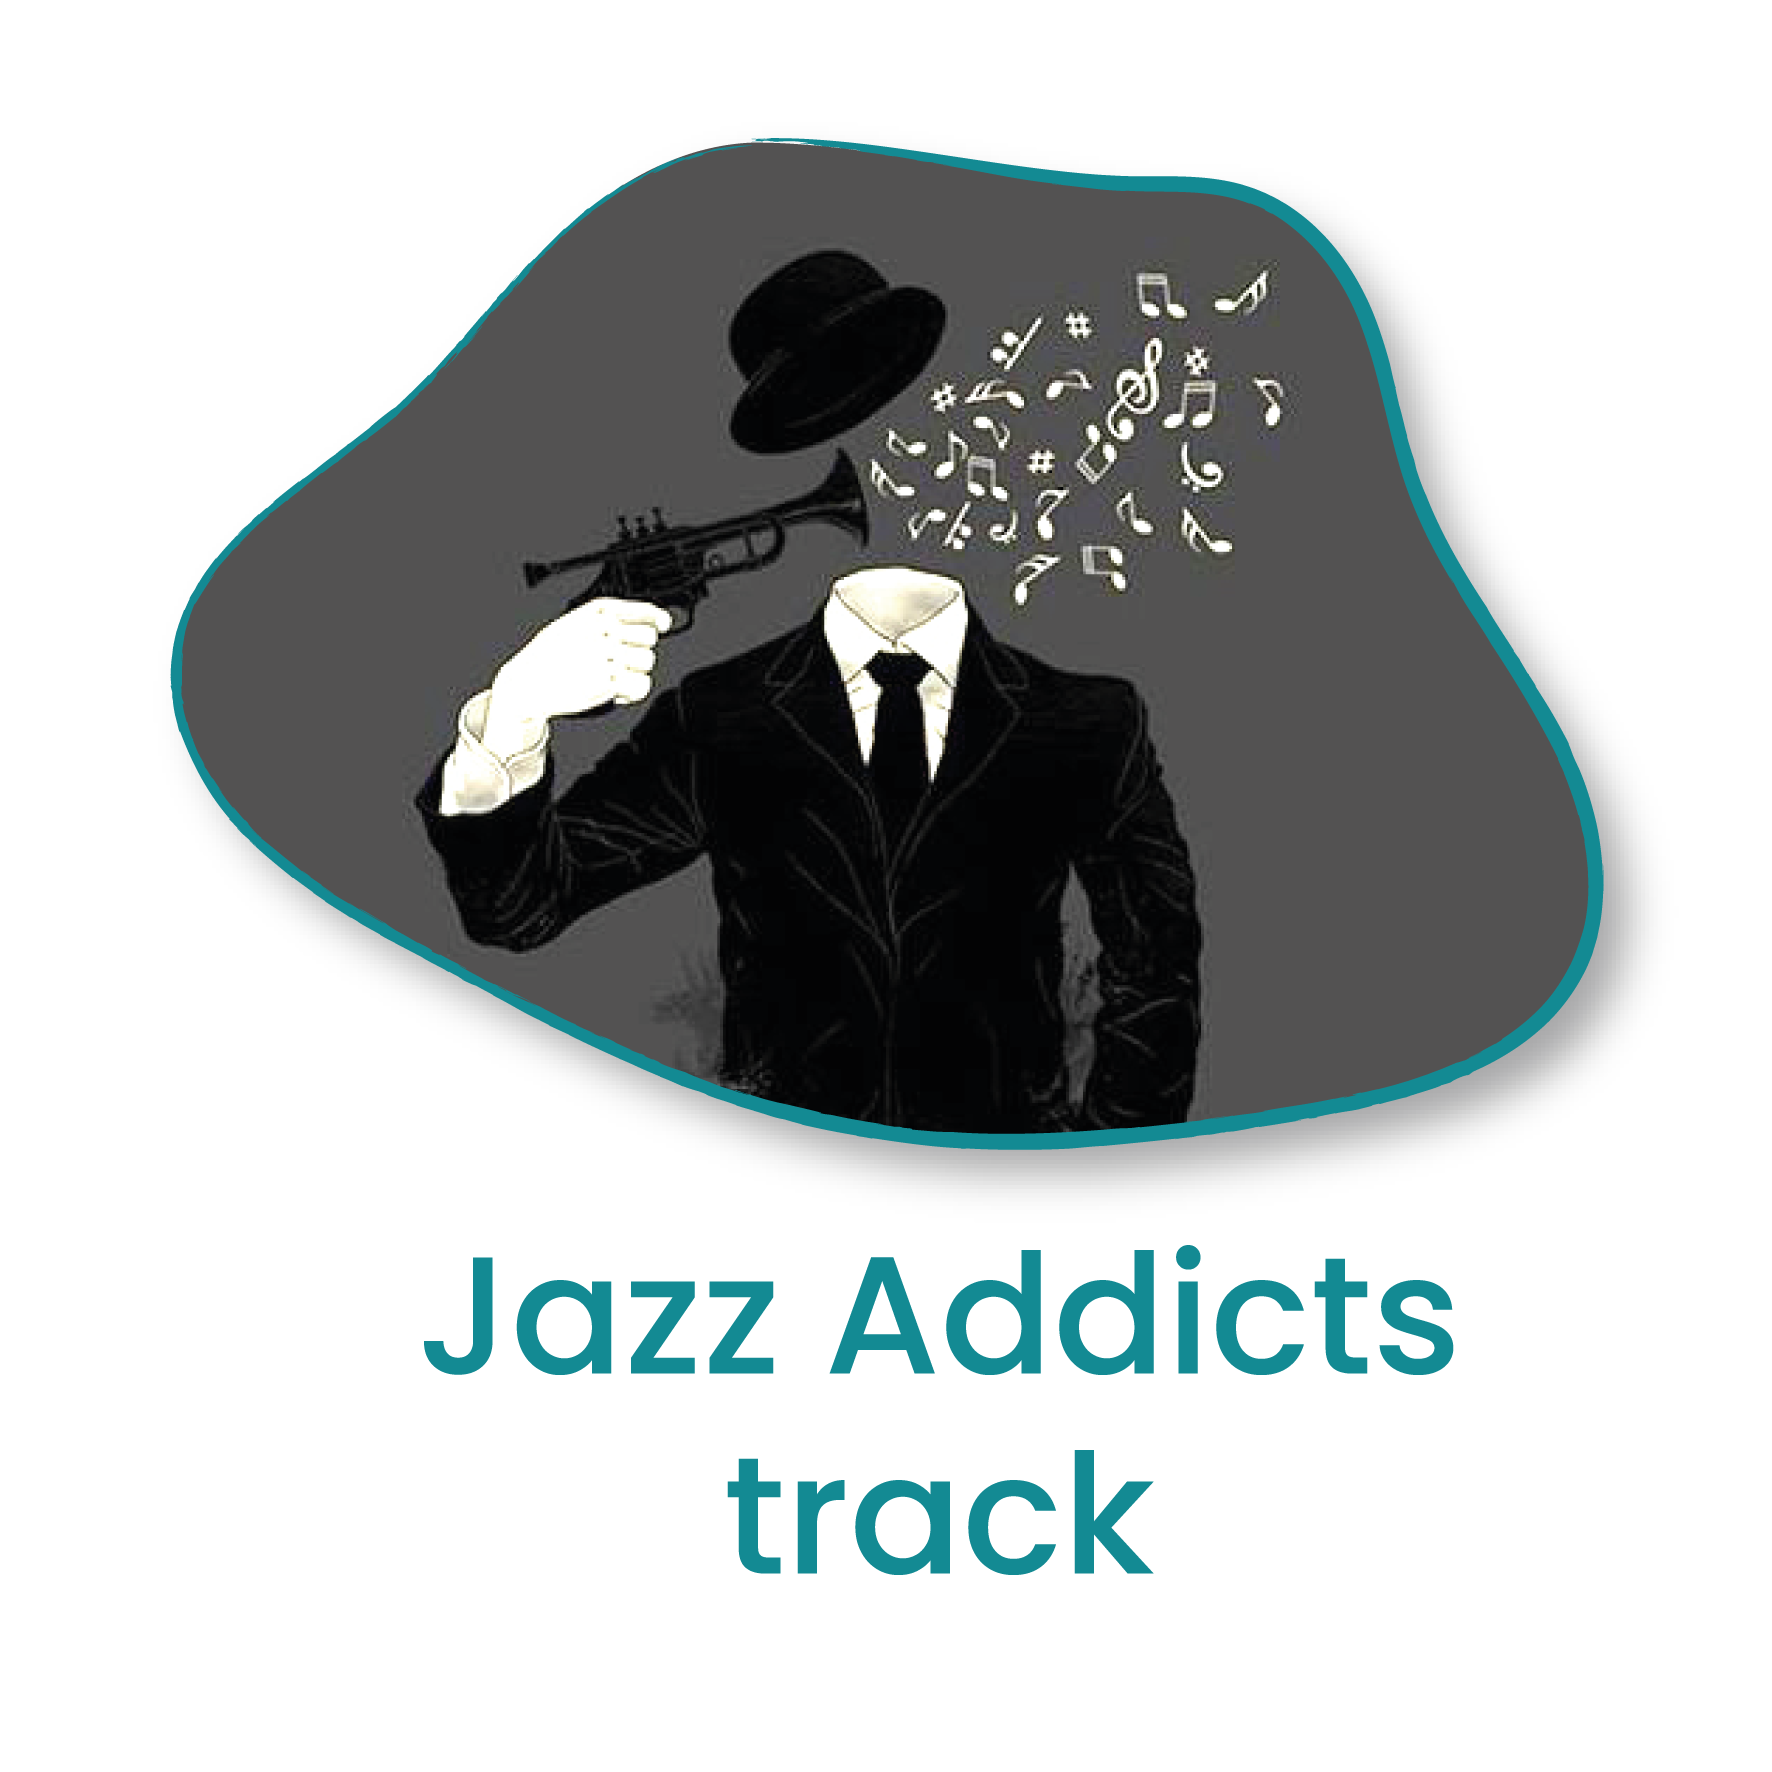 UDF jazz addicts track